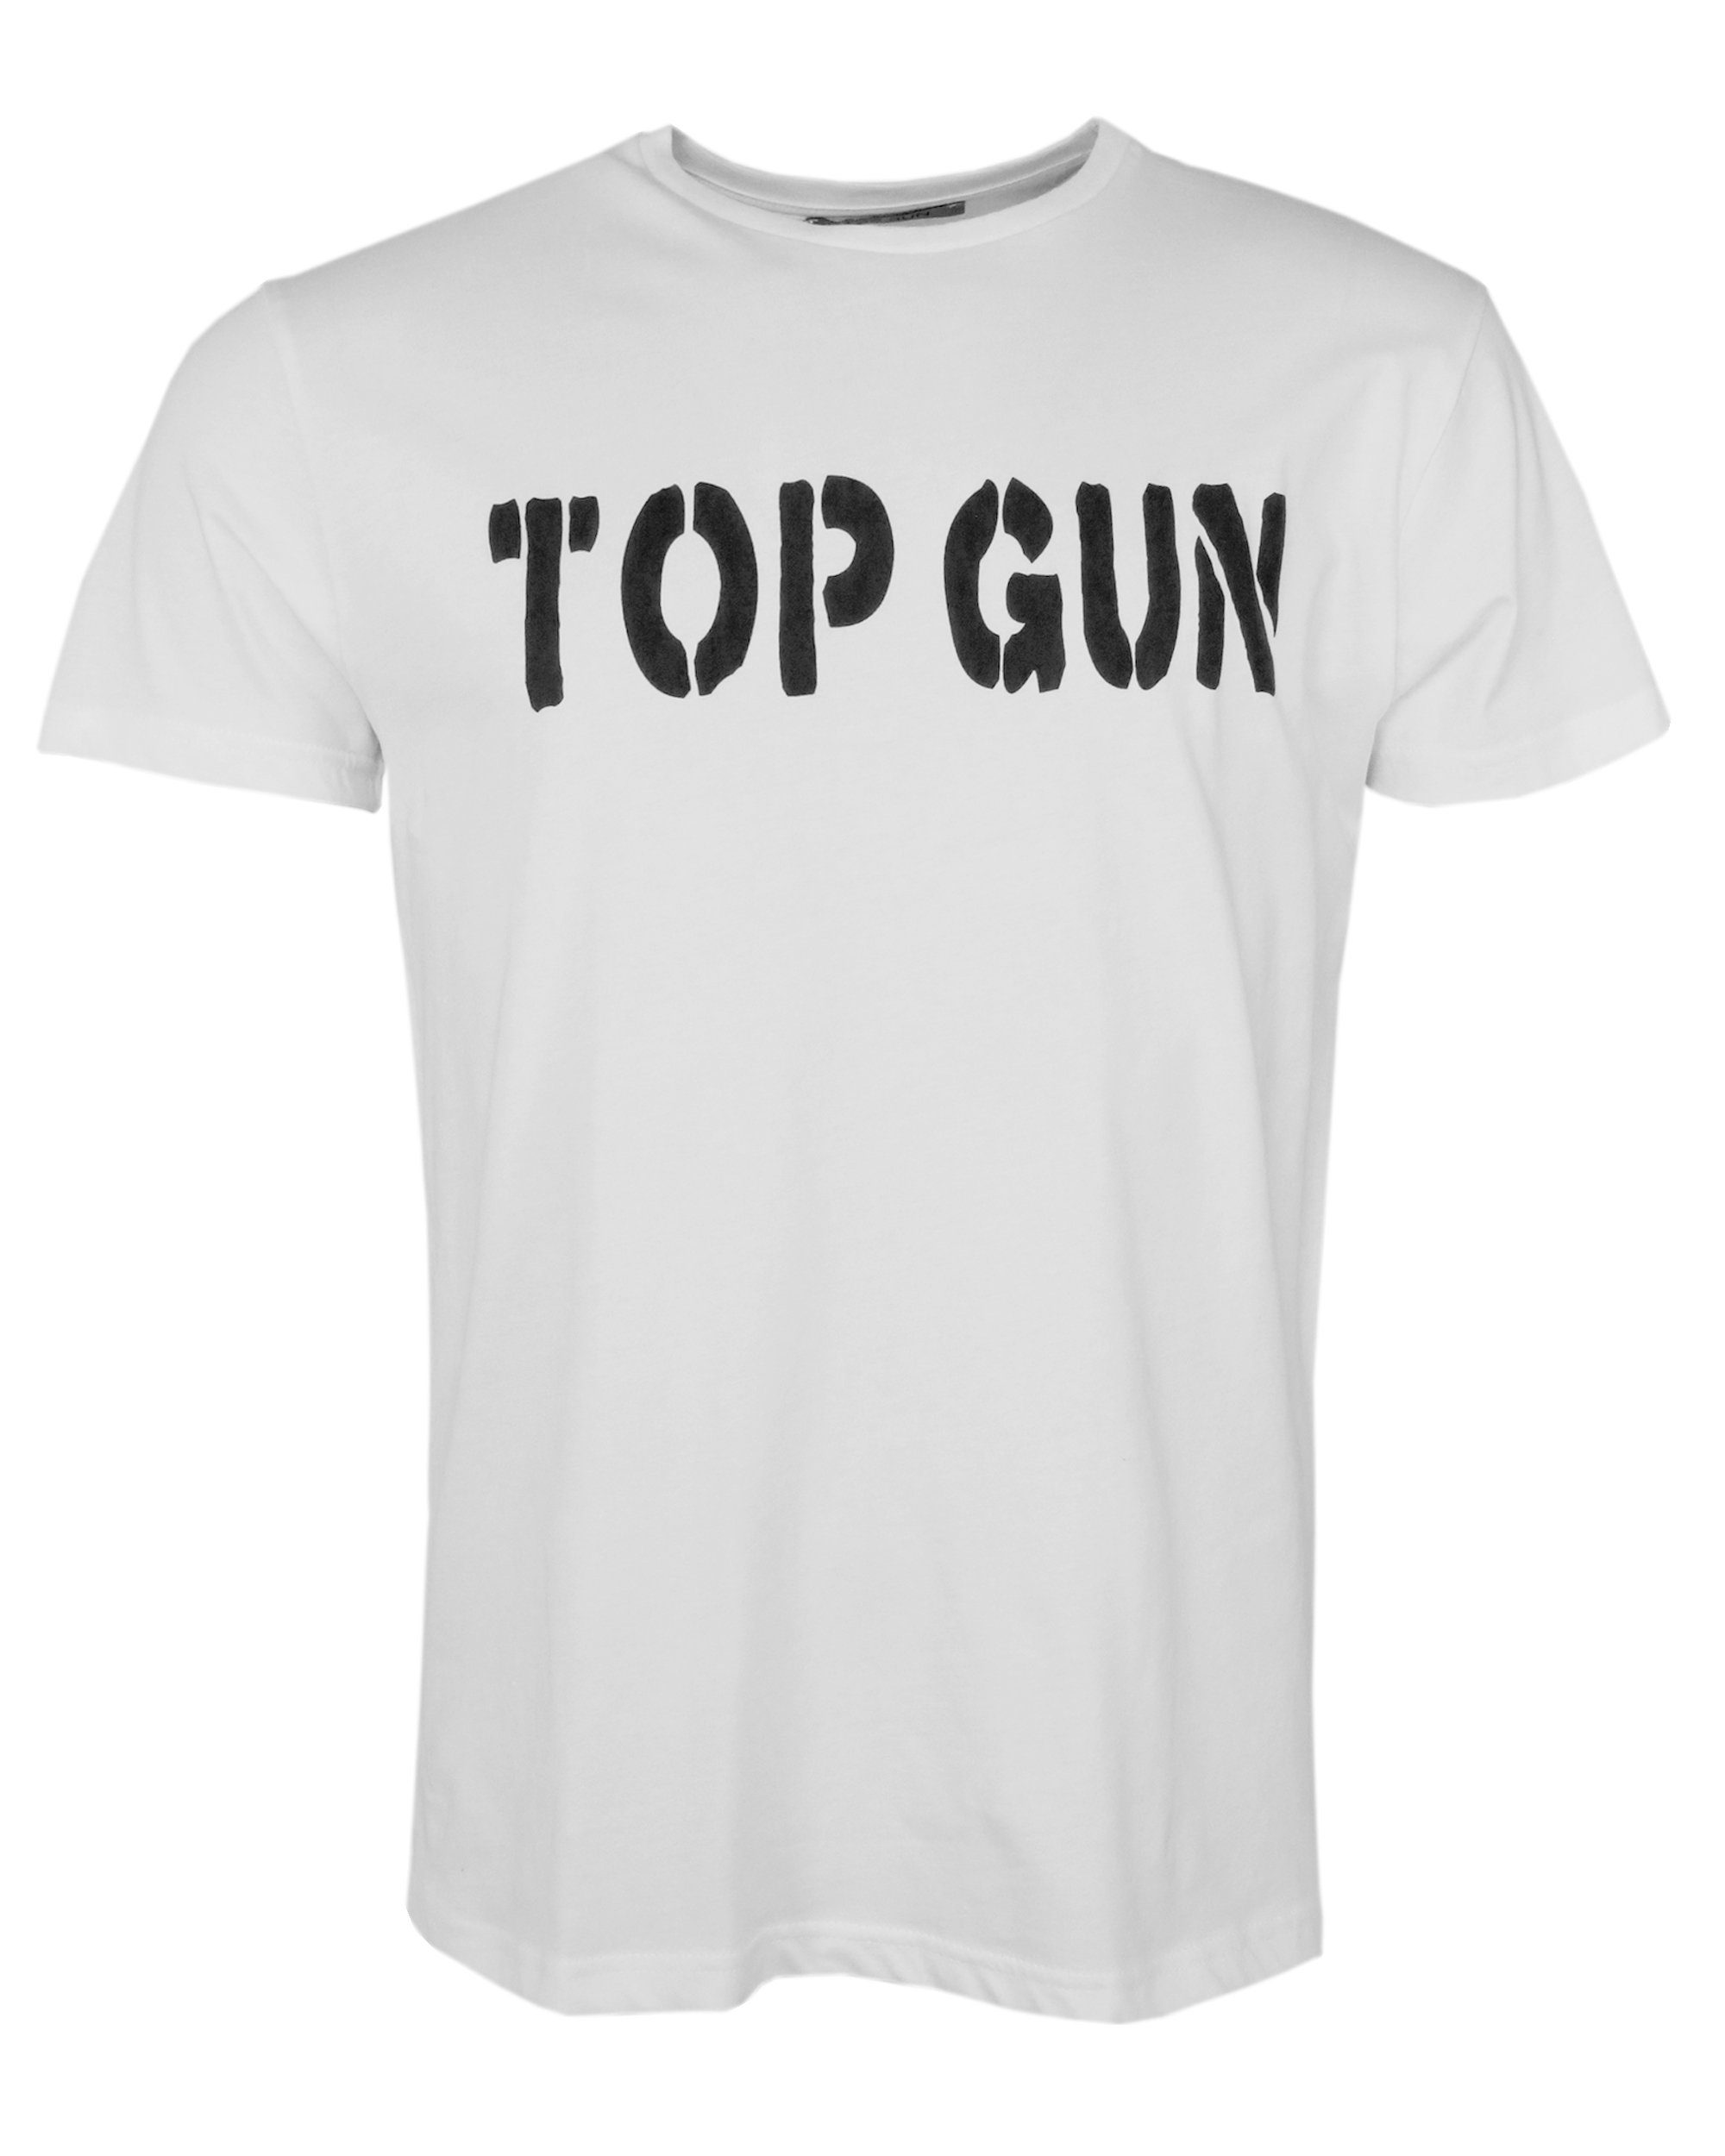 GUN TOP white T-Shirt TG20212016